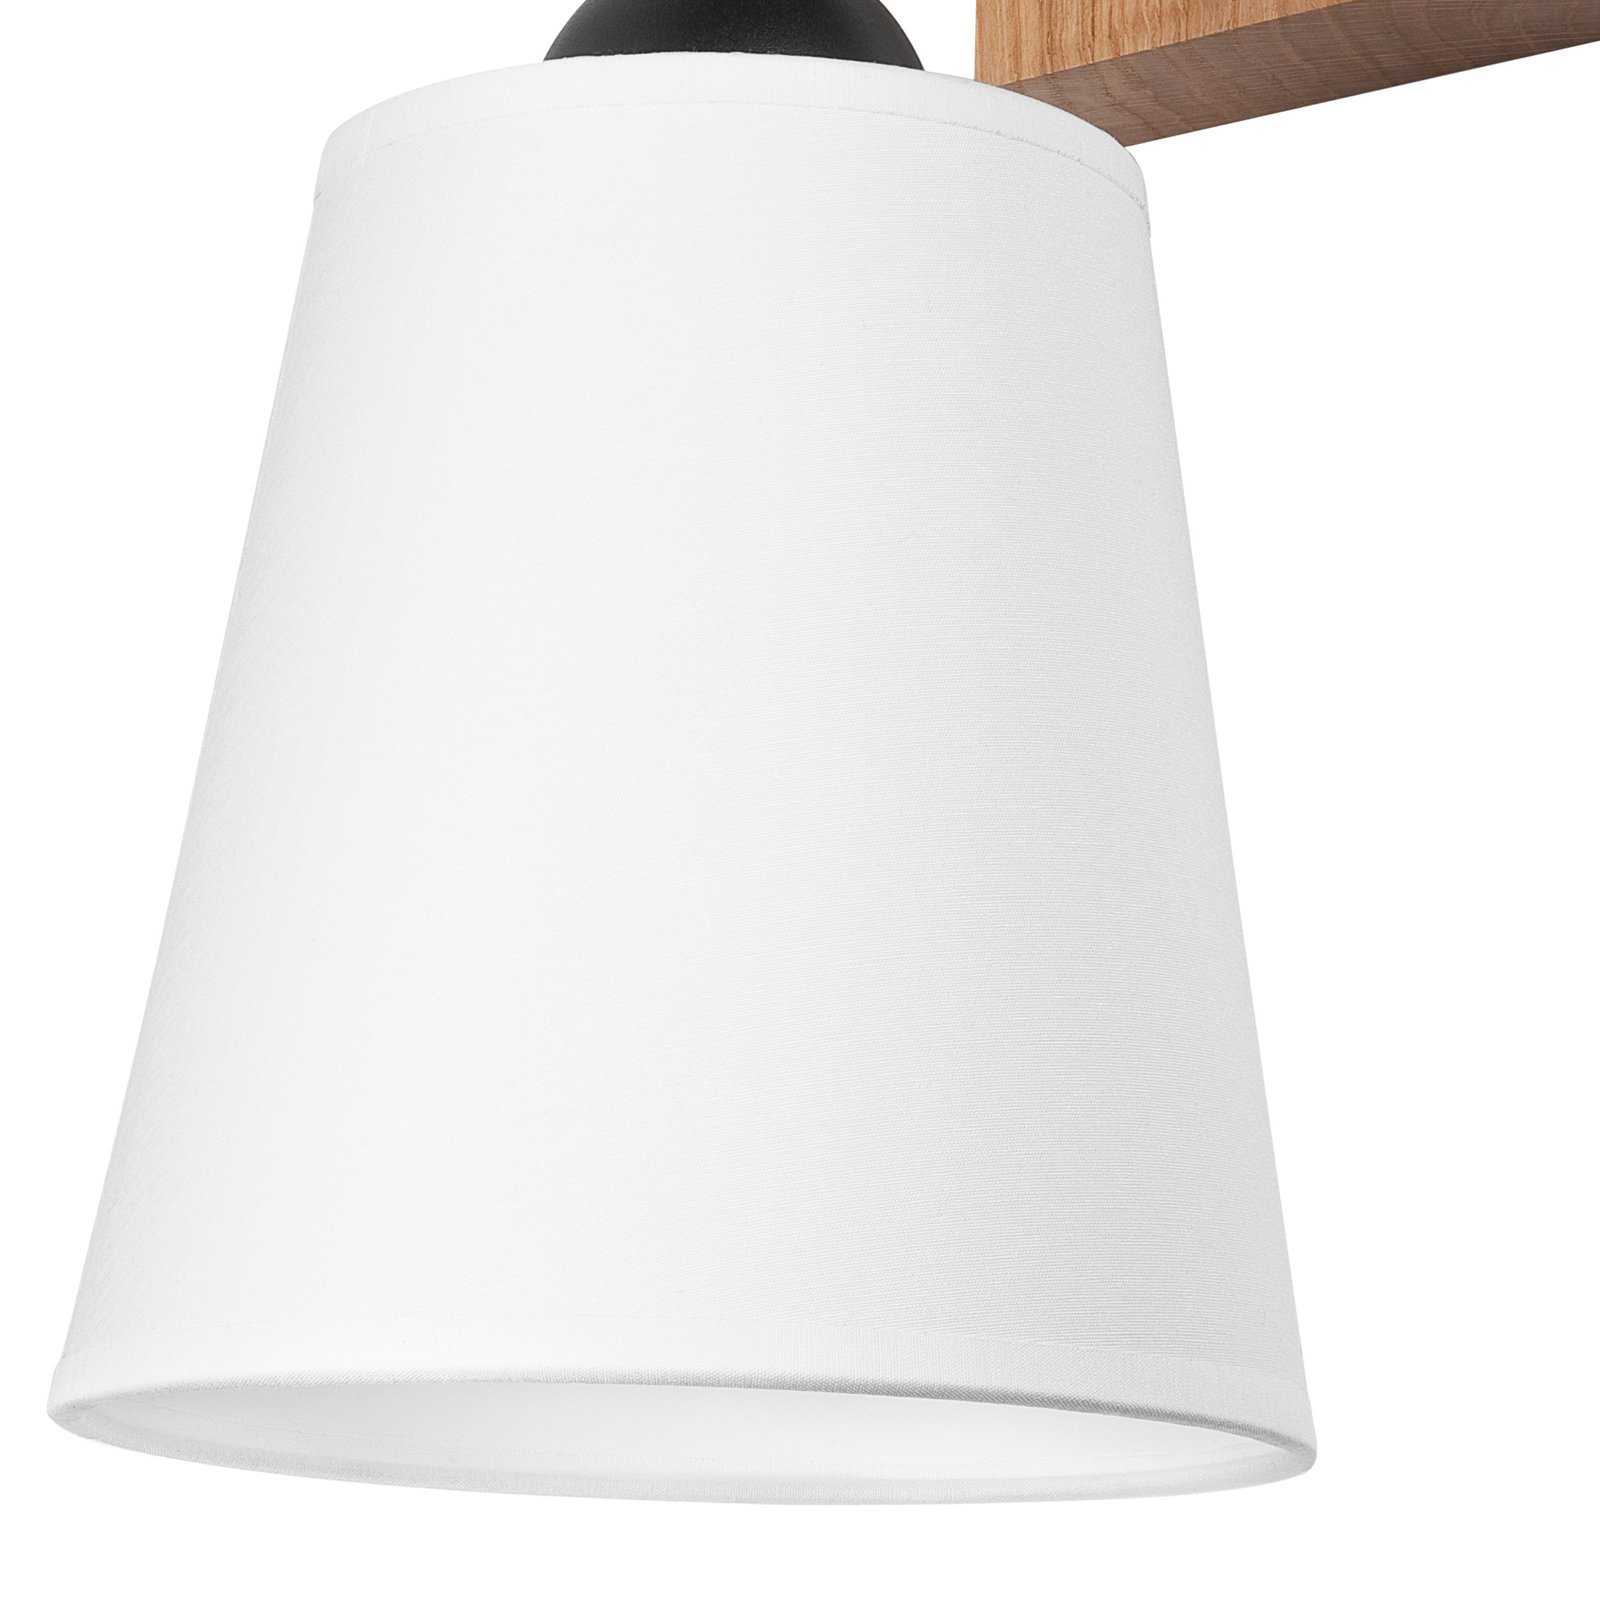 Envostar Risco wall light 1-bulb fabric shade white